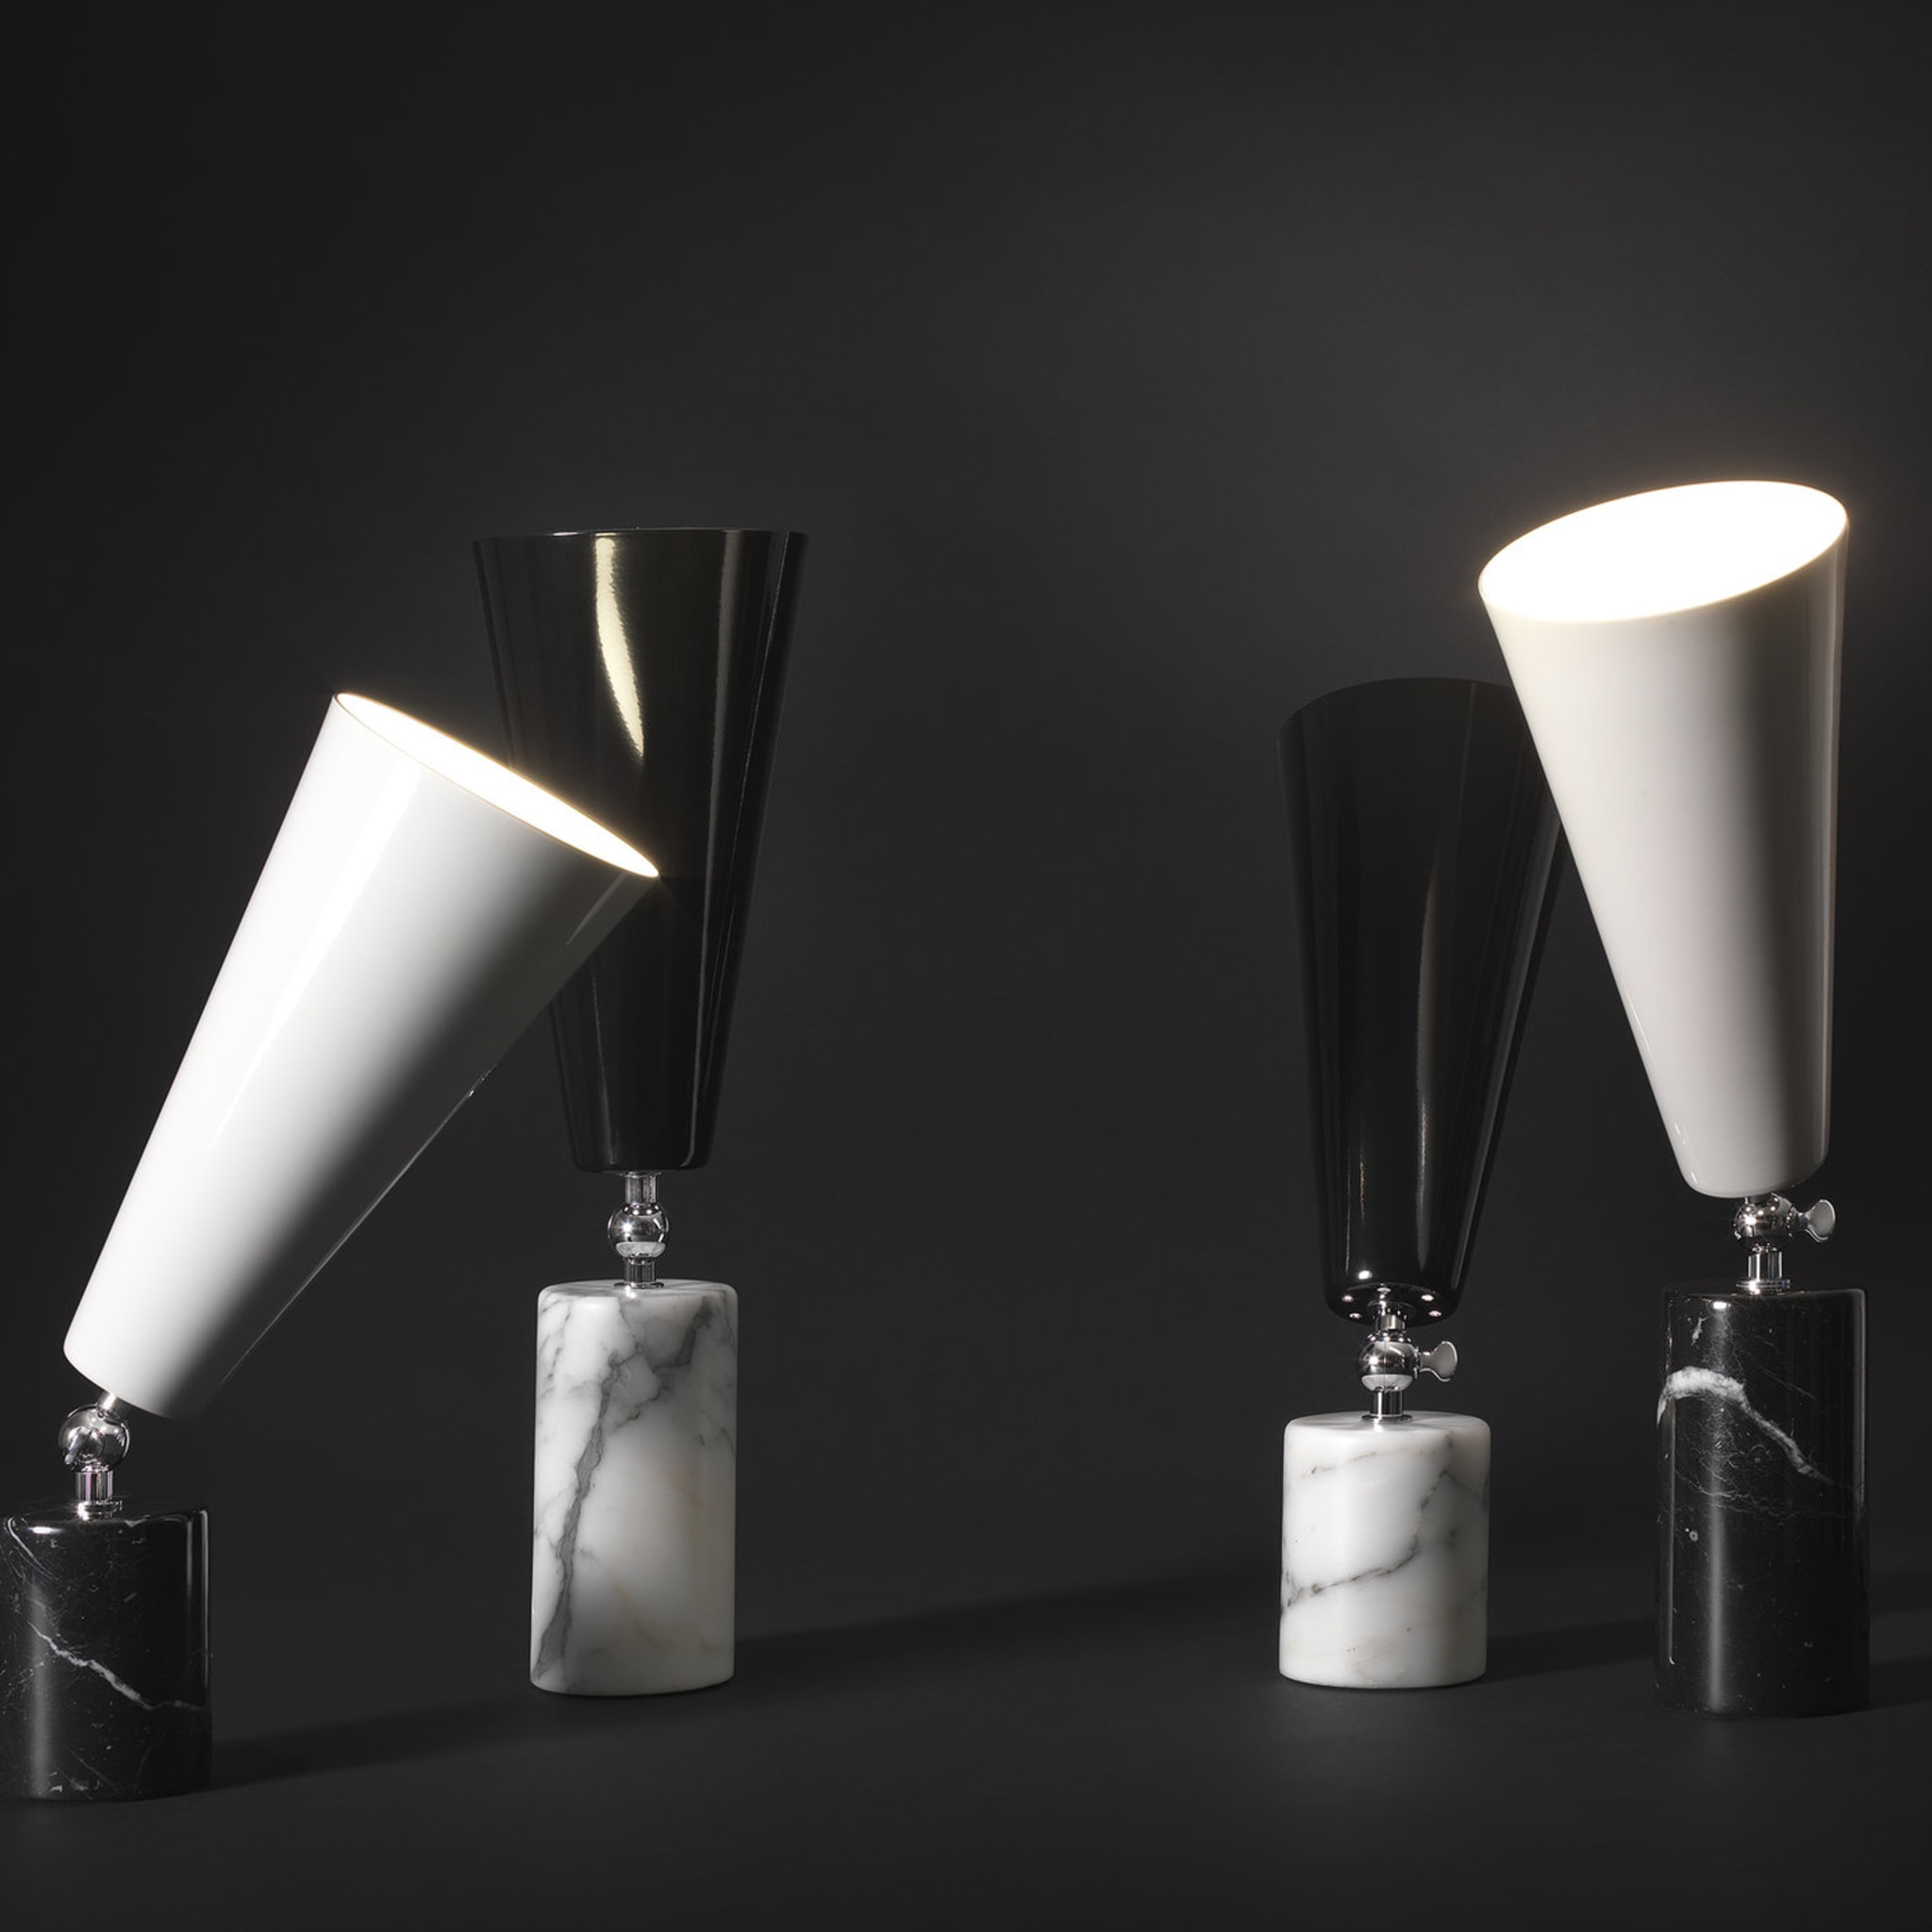 Vox Bassa Table Lamp by Lorenza Bozzoli in Carrara Marble - Alternative view 1